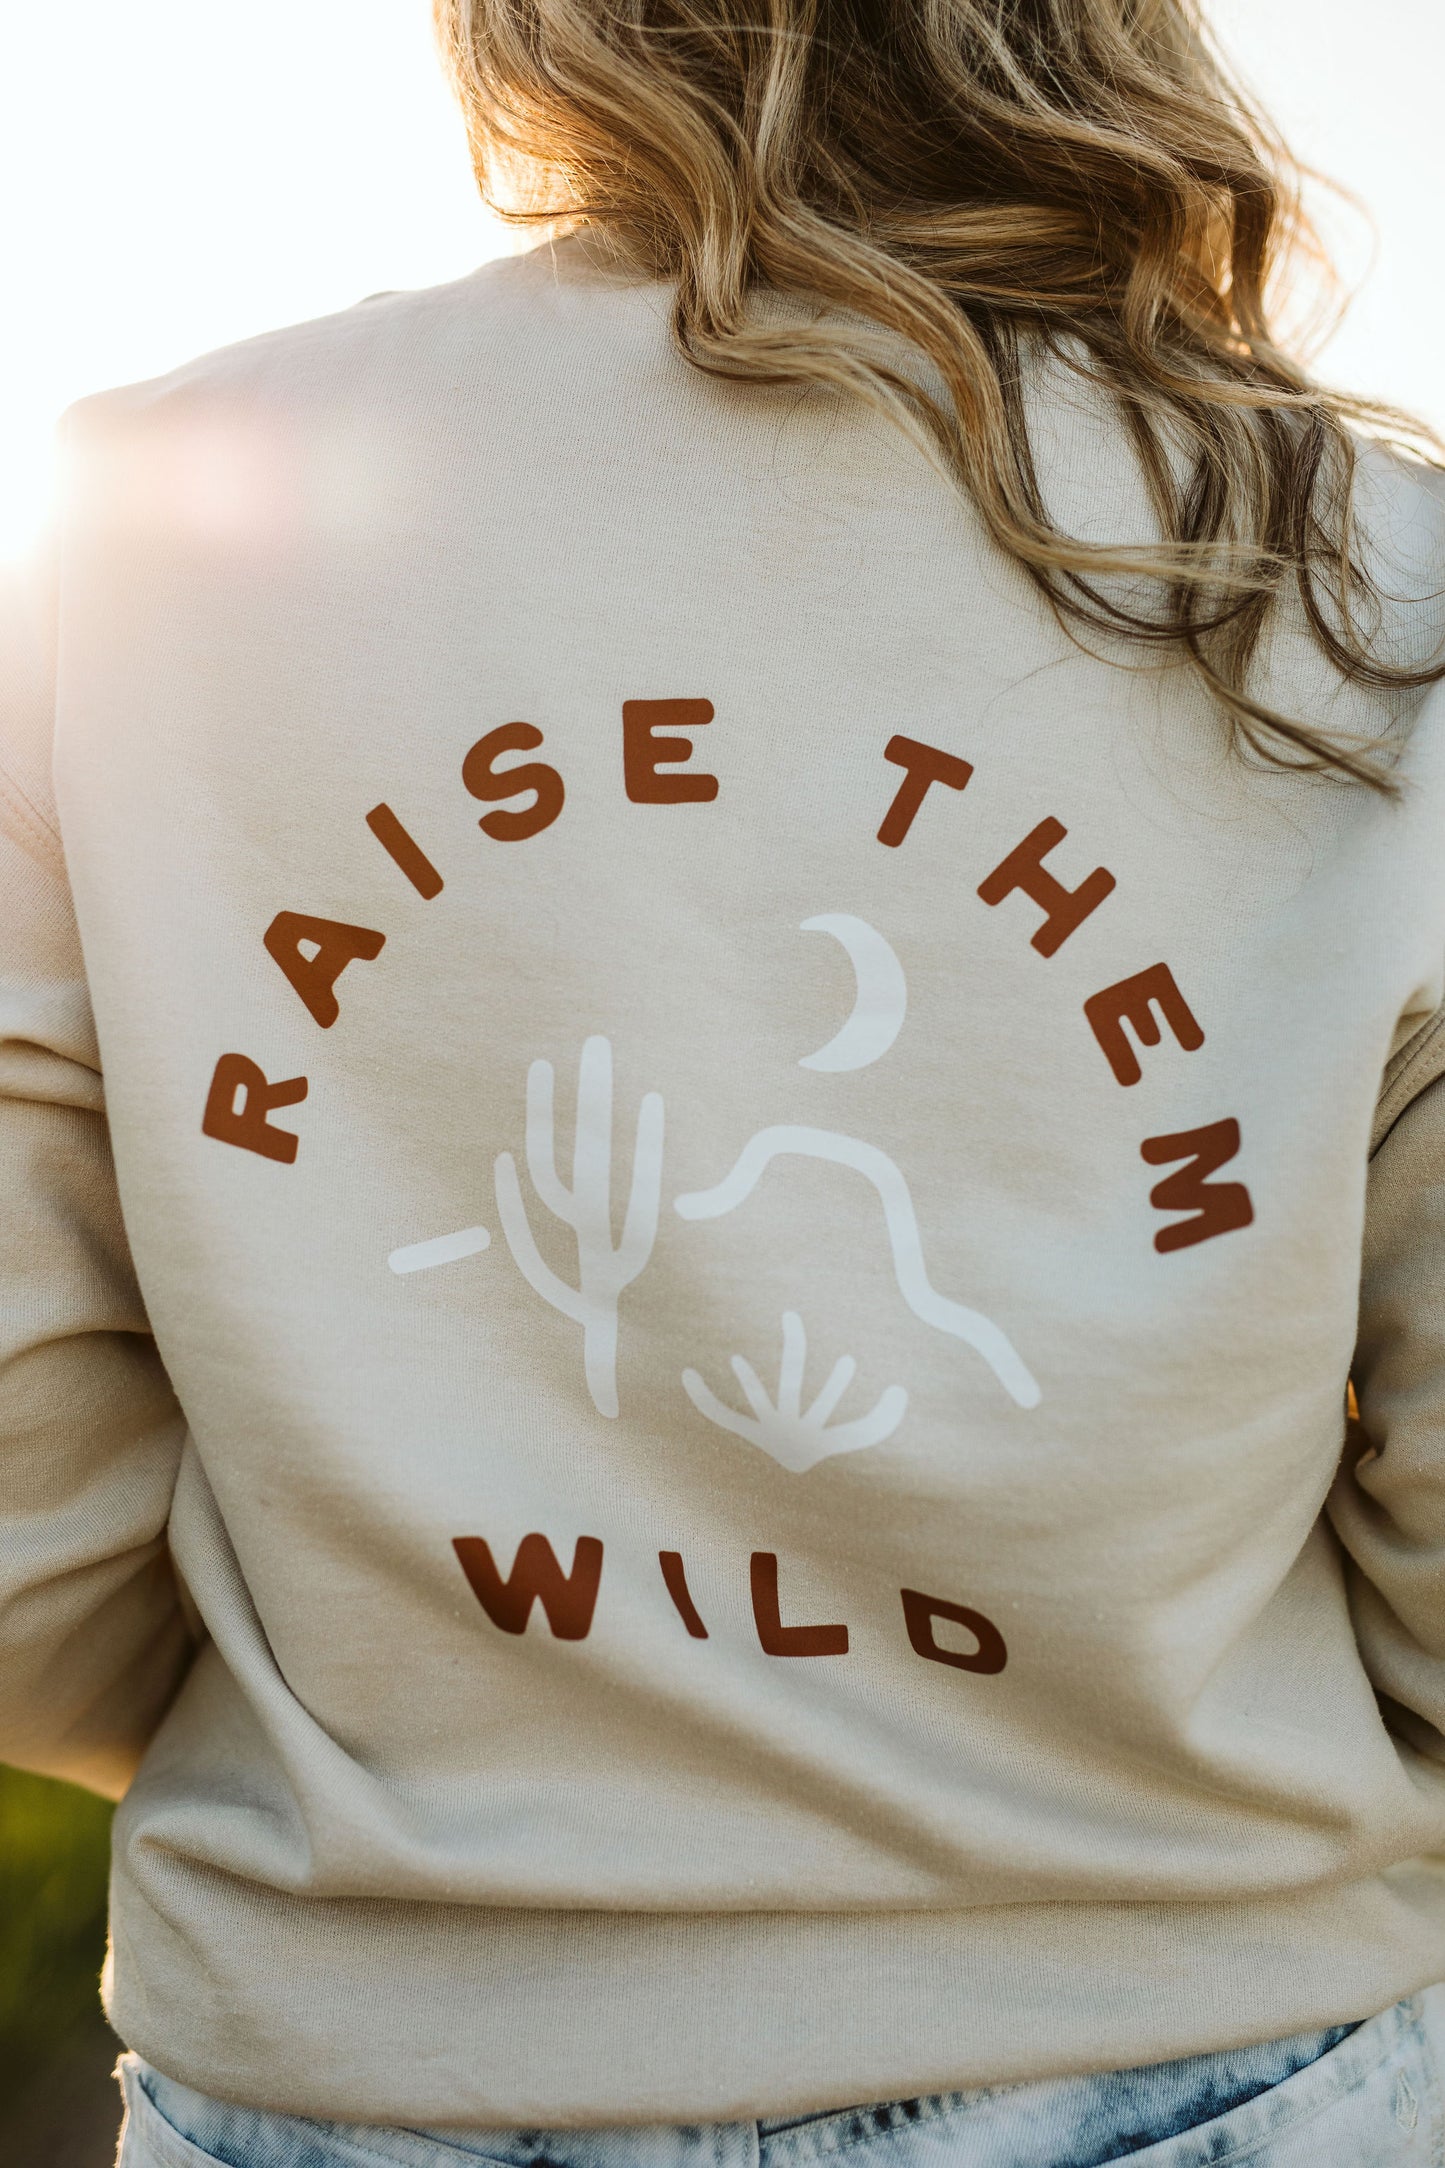 Raise Them Wild